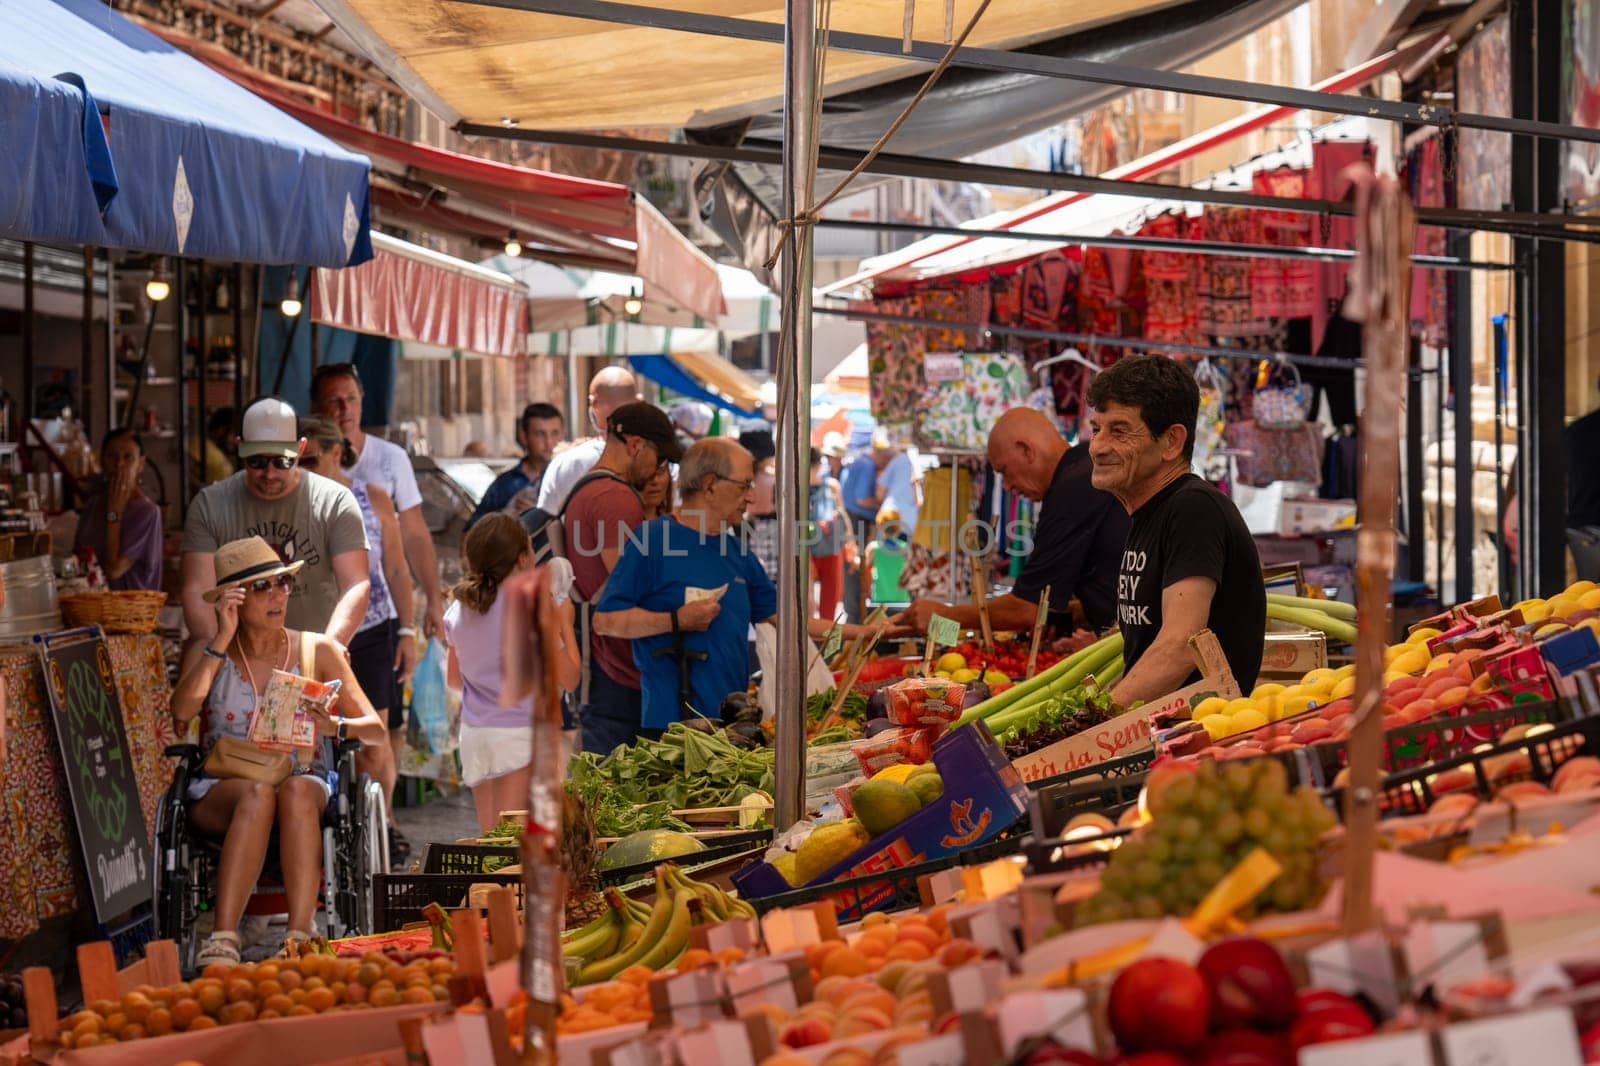 Capo Market in Palermo, Sicily by oliverfoerstner